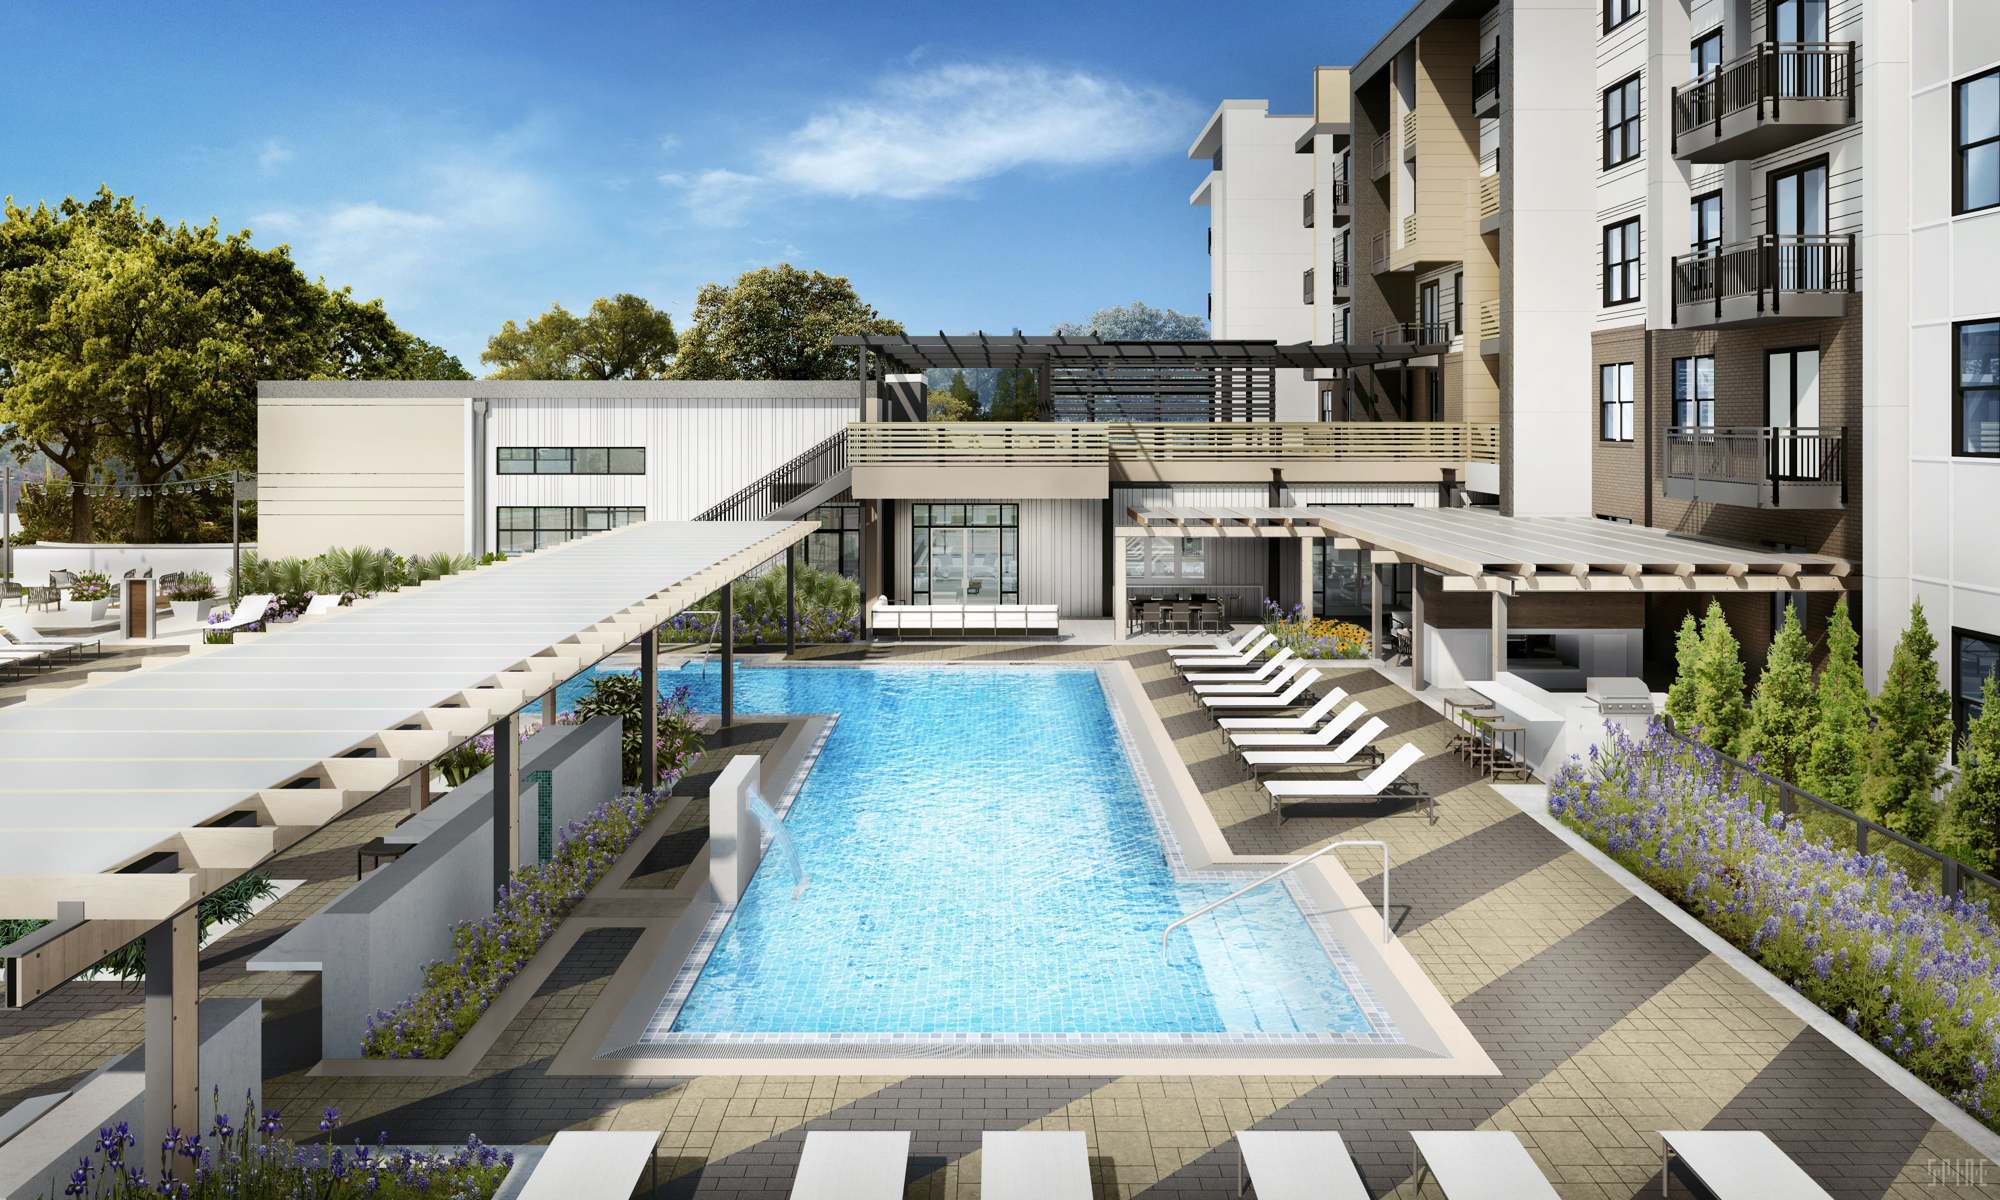 The pool area at JTB Luxury Apartments.